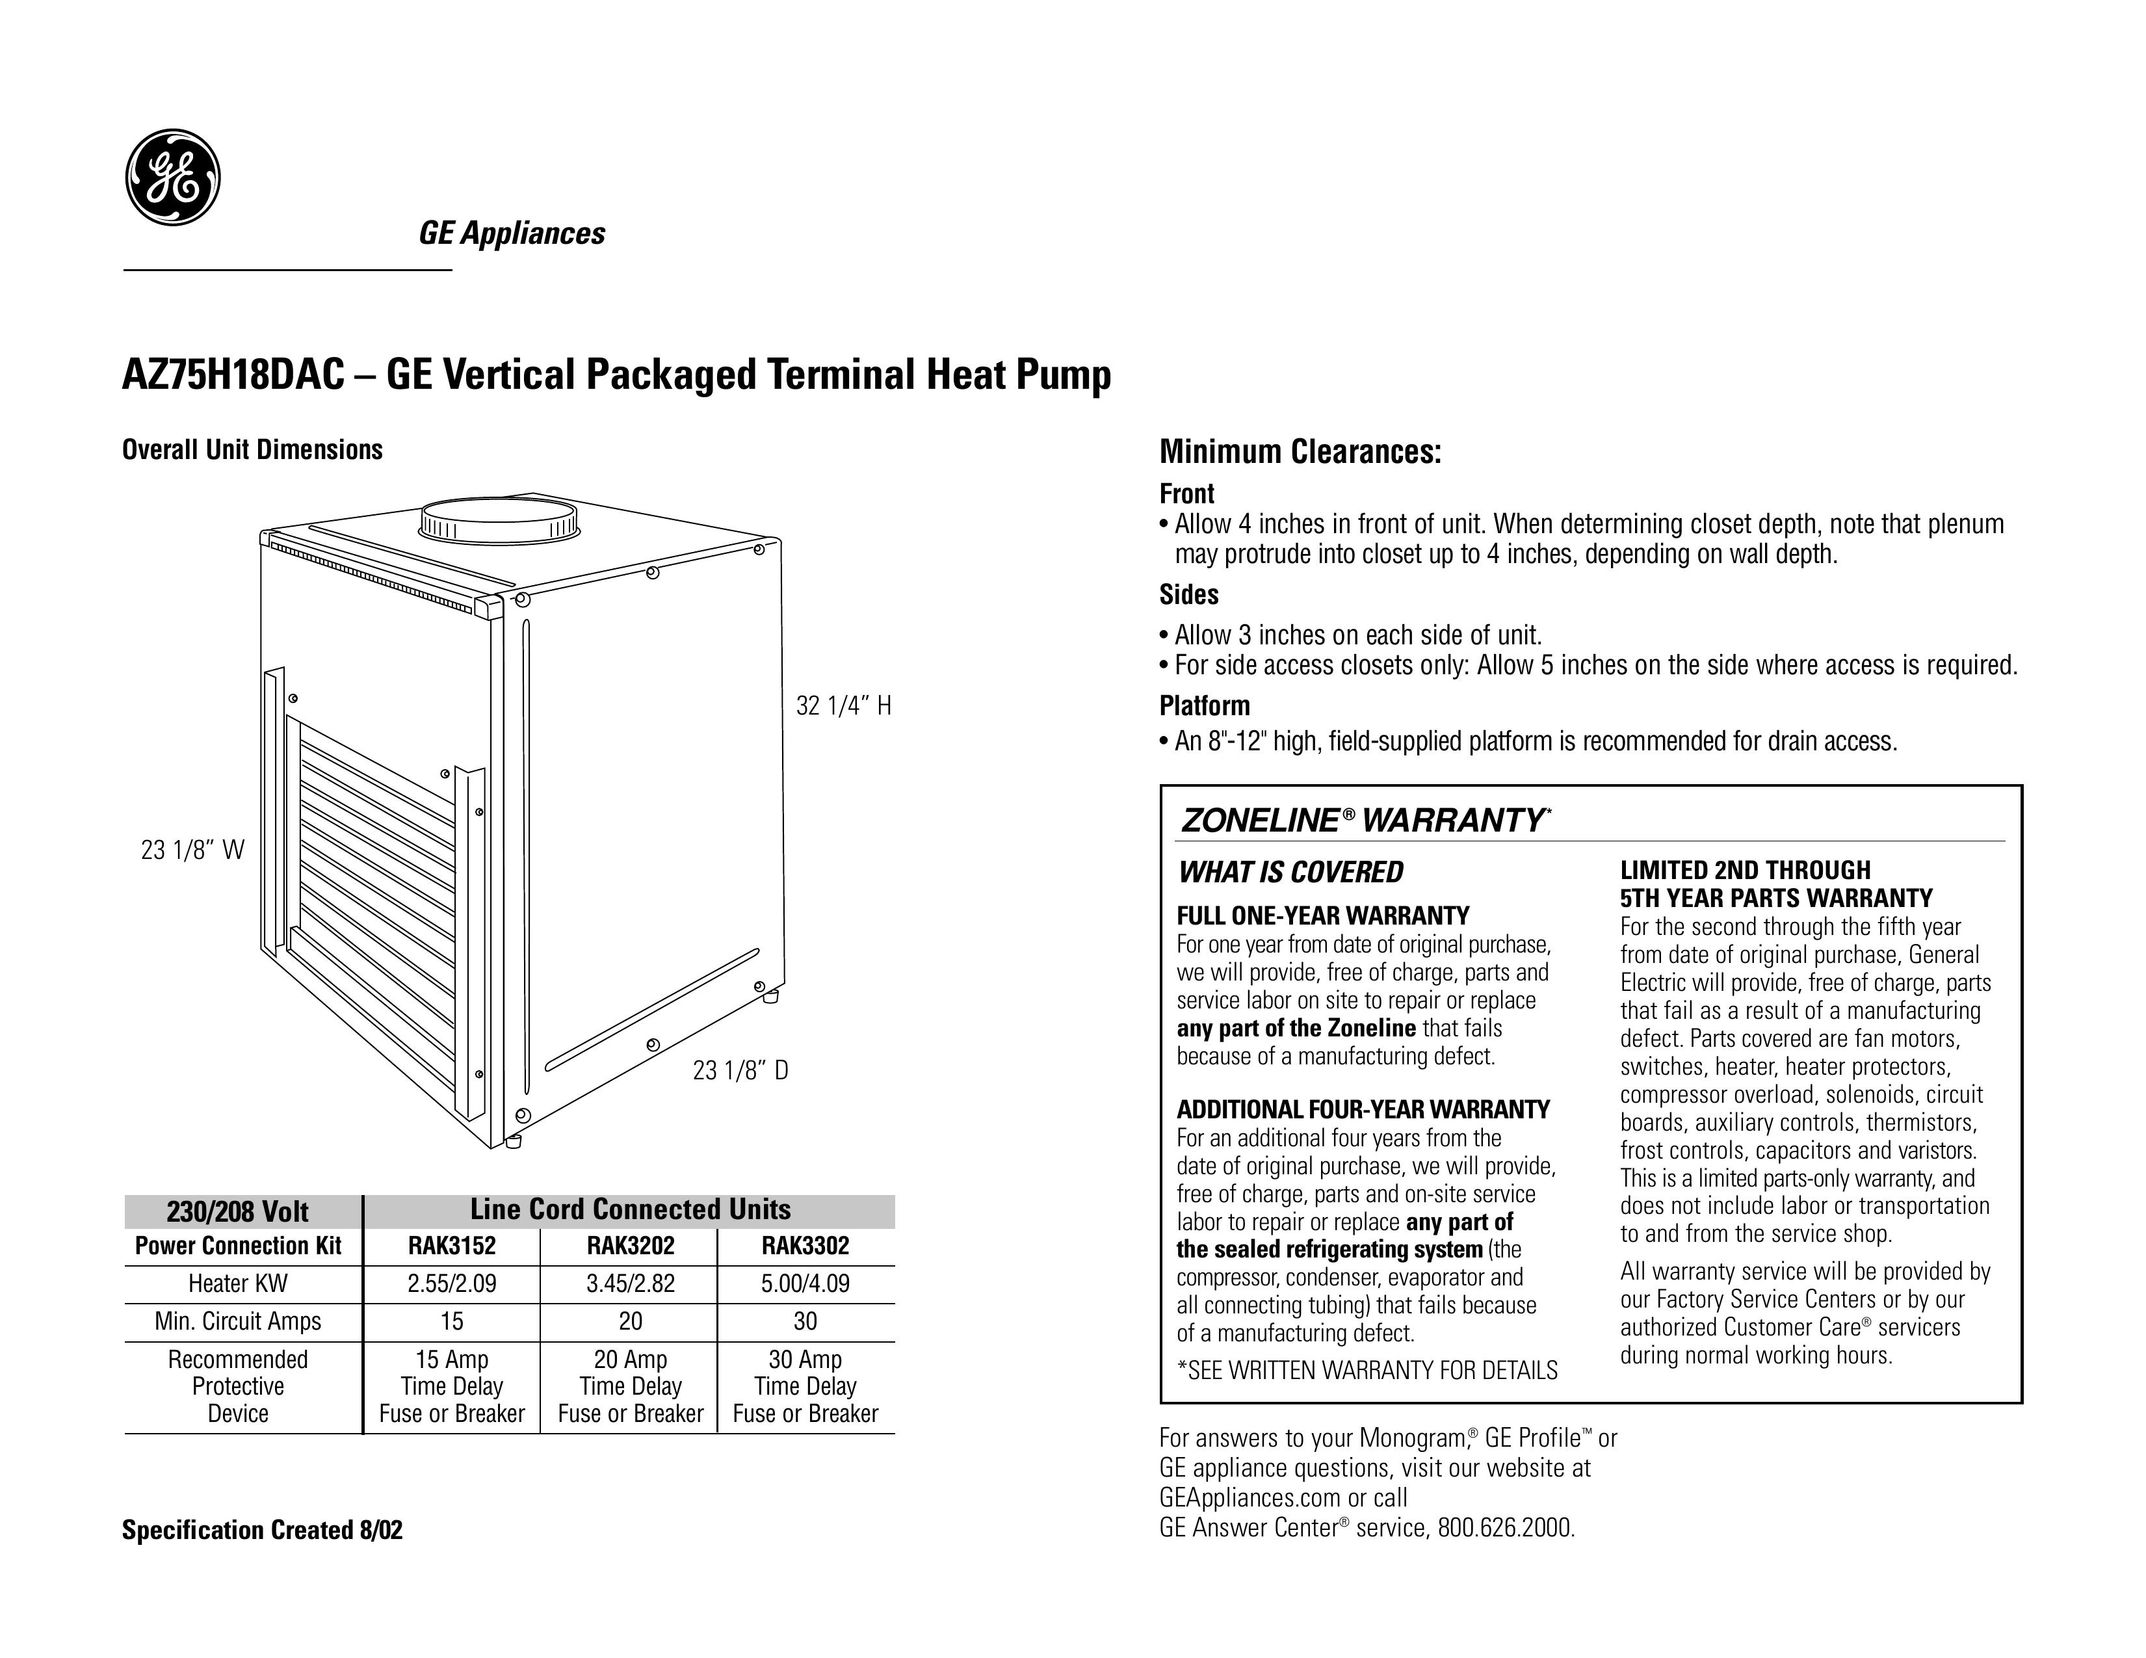 GE AZ75H18DAC Heat Pump User Manual